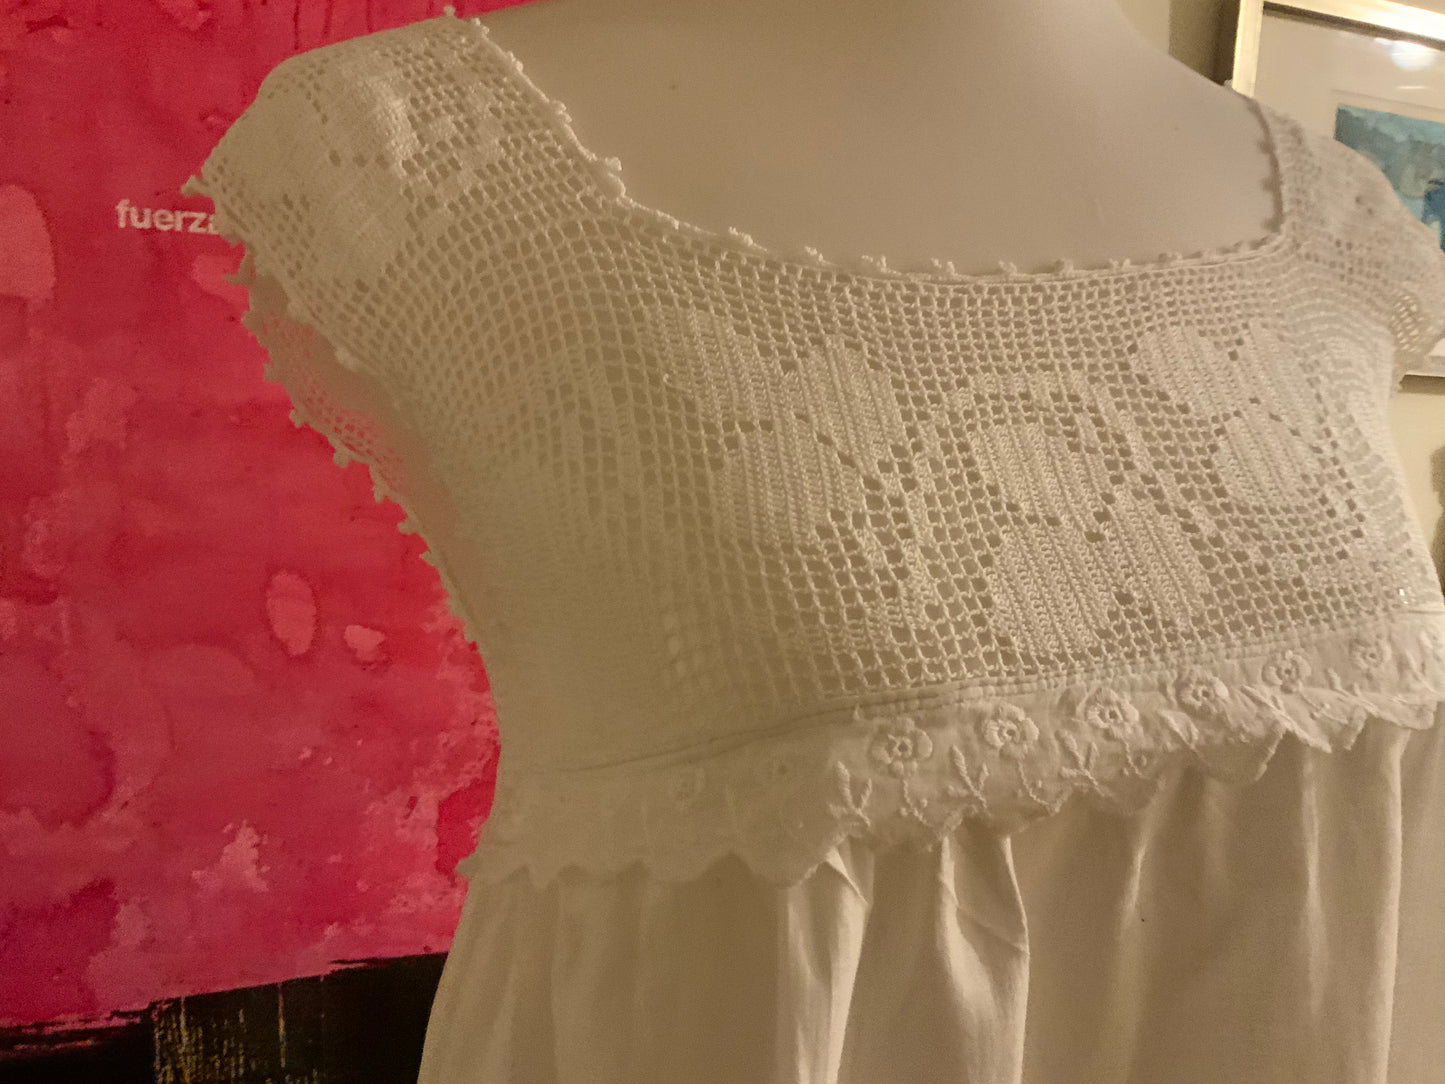 Victoria Cotton Nightgown - Filet Lace - 1800